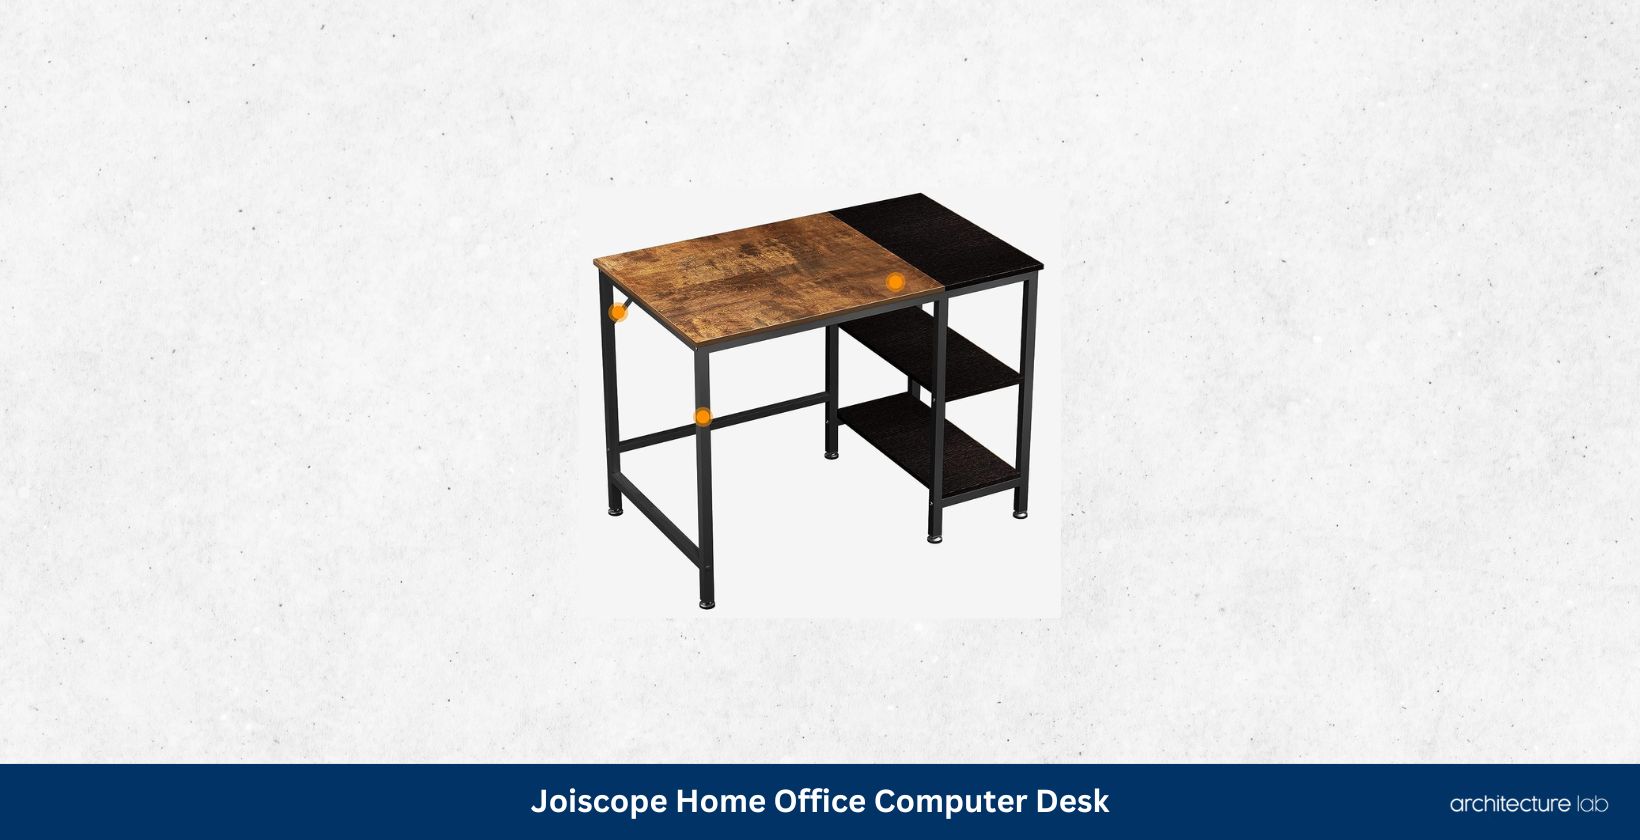 Joiscope home office computer desk